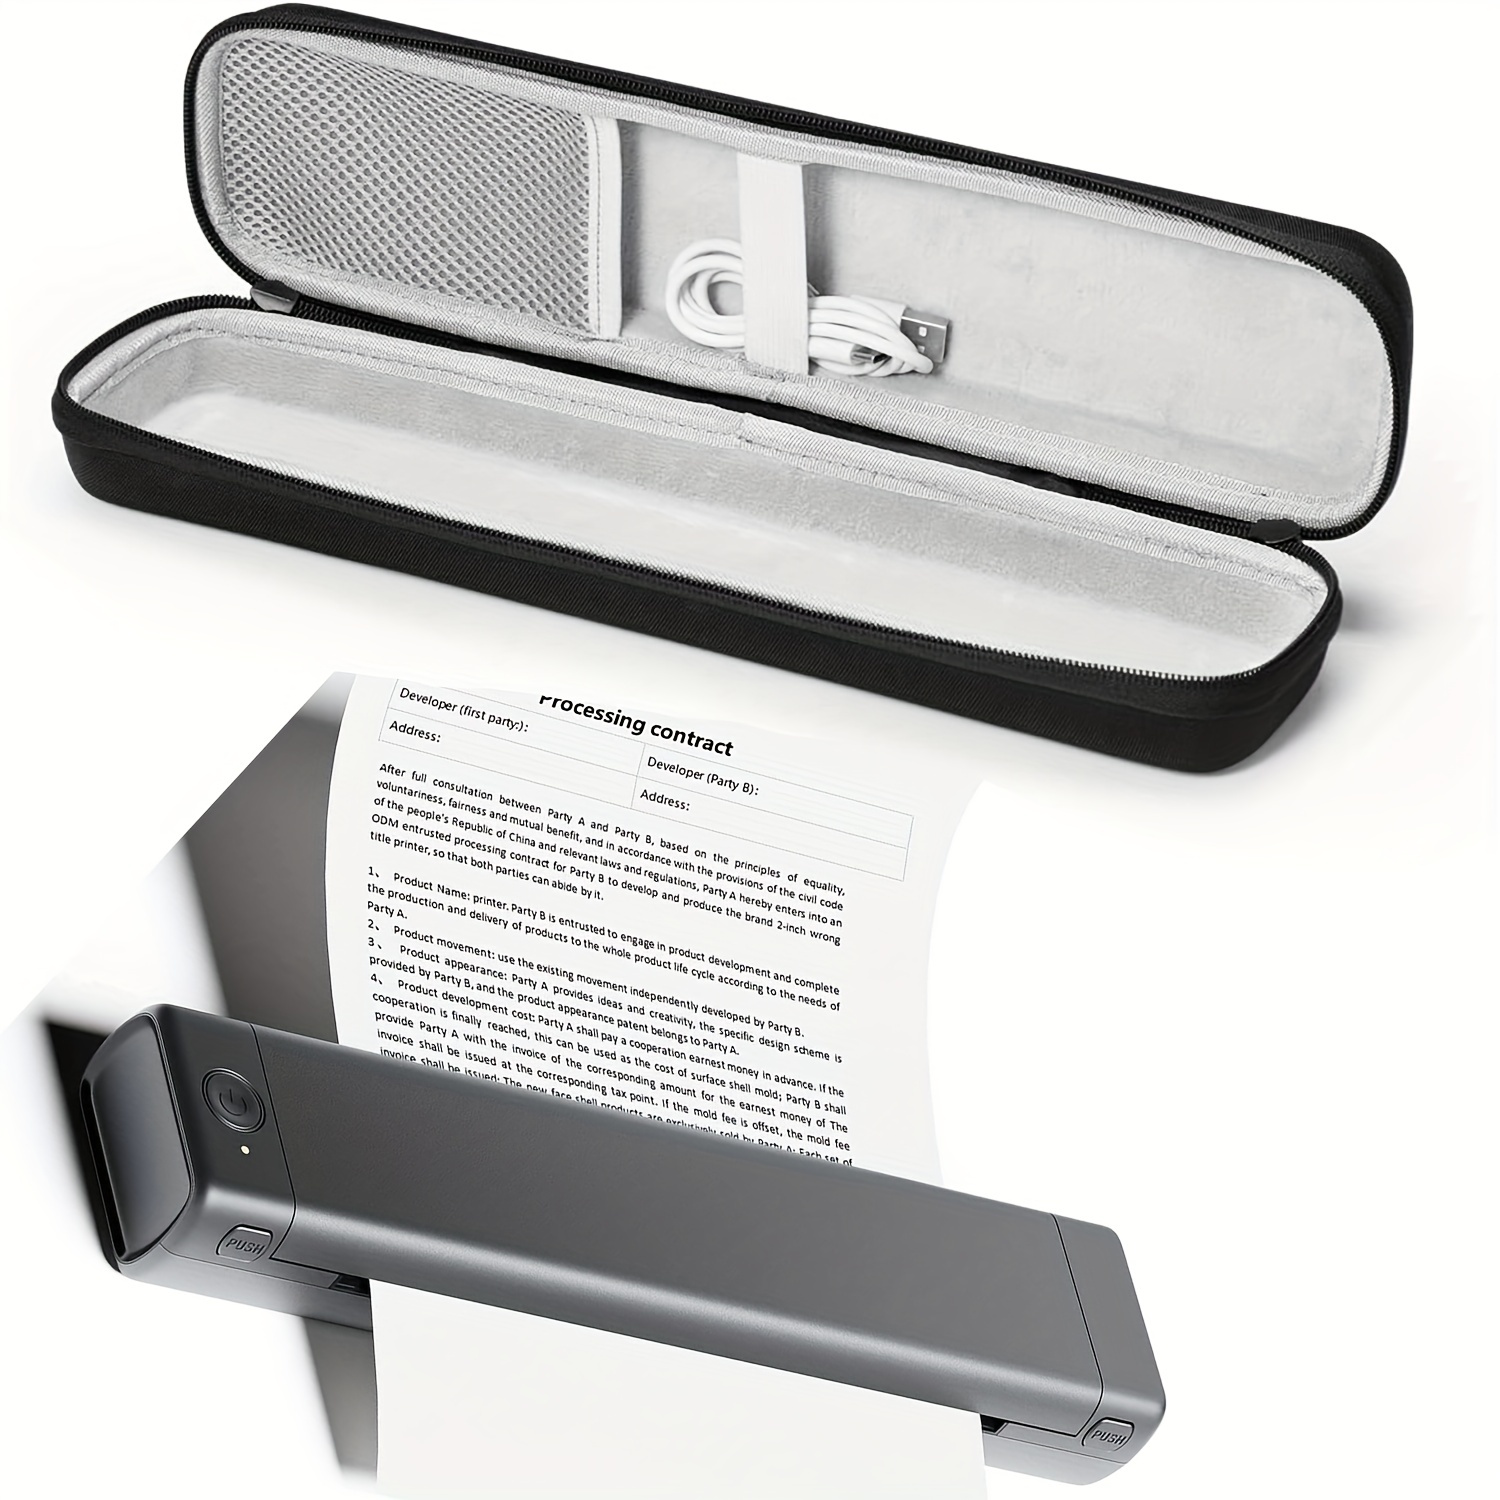 Mini Imprimante Portable – MovinPrint